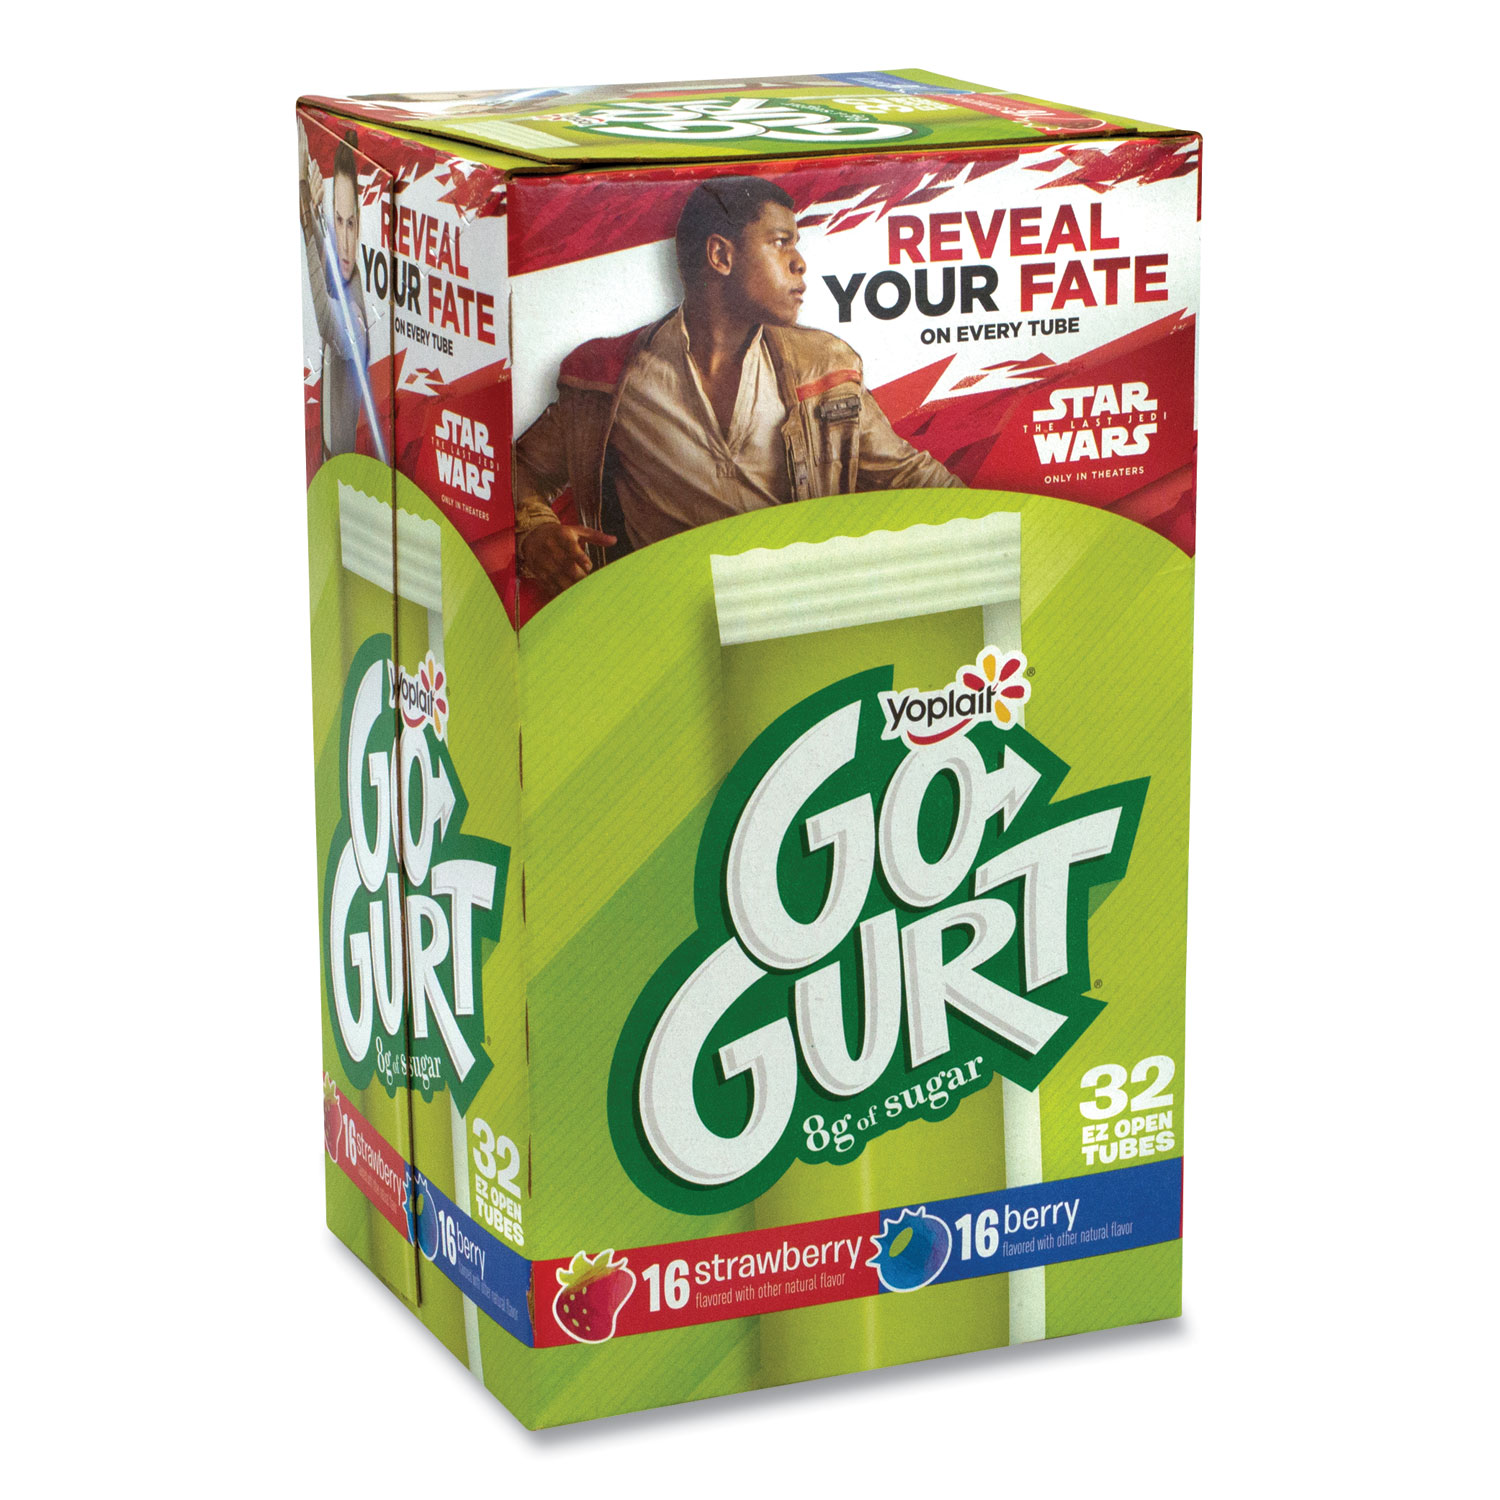  Yoplait 369067 Go-Gurt Low Fat Yogurt, 2 oz Tube, 32 Tubes/Box, Free Delivery in 1-4 Business Days (GRR90200002) 